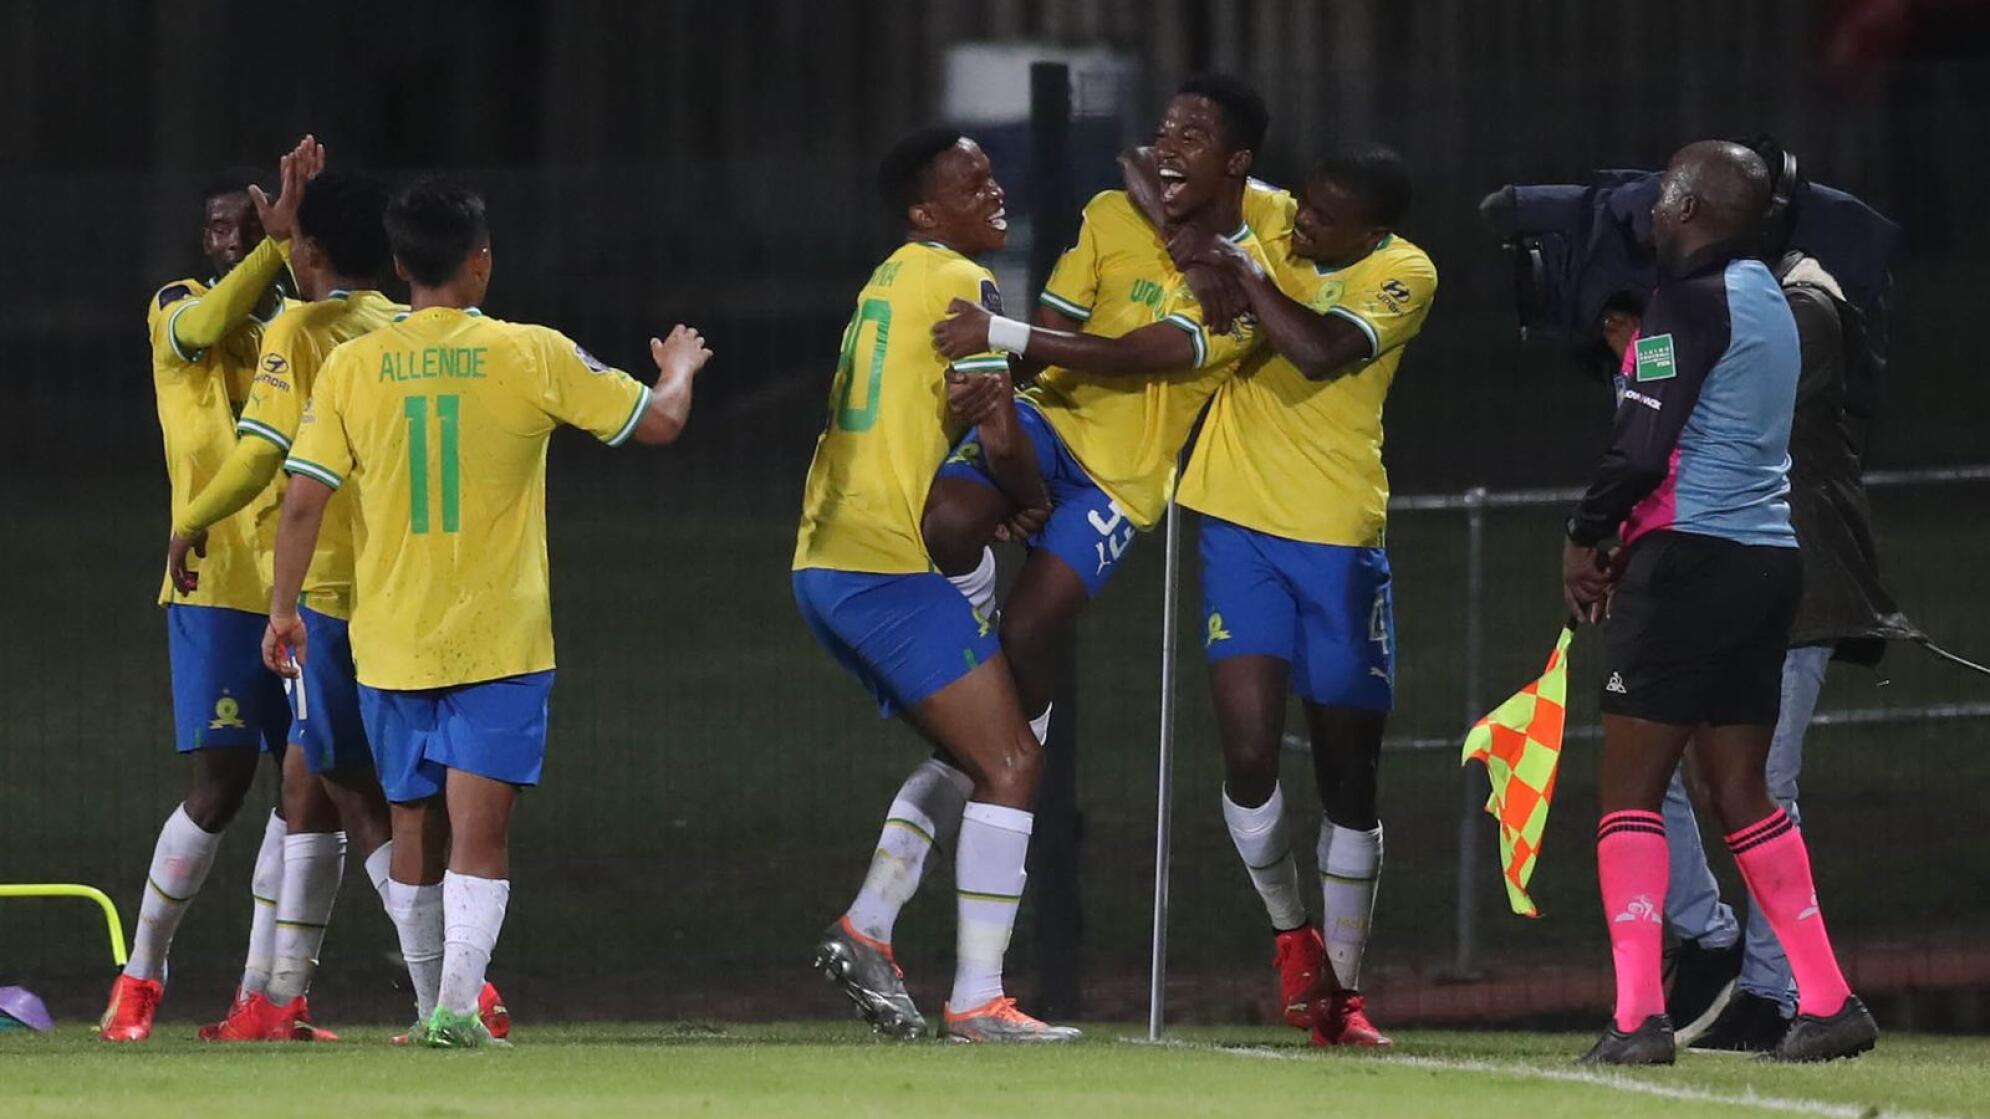 Cassius Mailula of Mamelodi Sundowns celebrates with teammates after scoring a goal during their DStv Premiership match against Maritzburg United at Harry Gwala Stadium in Pietermaritzburh on Saturday